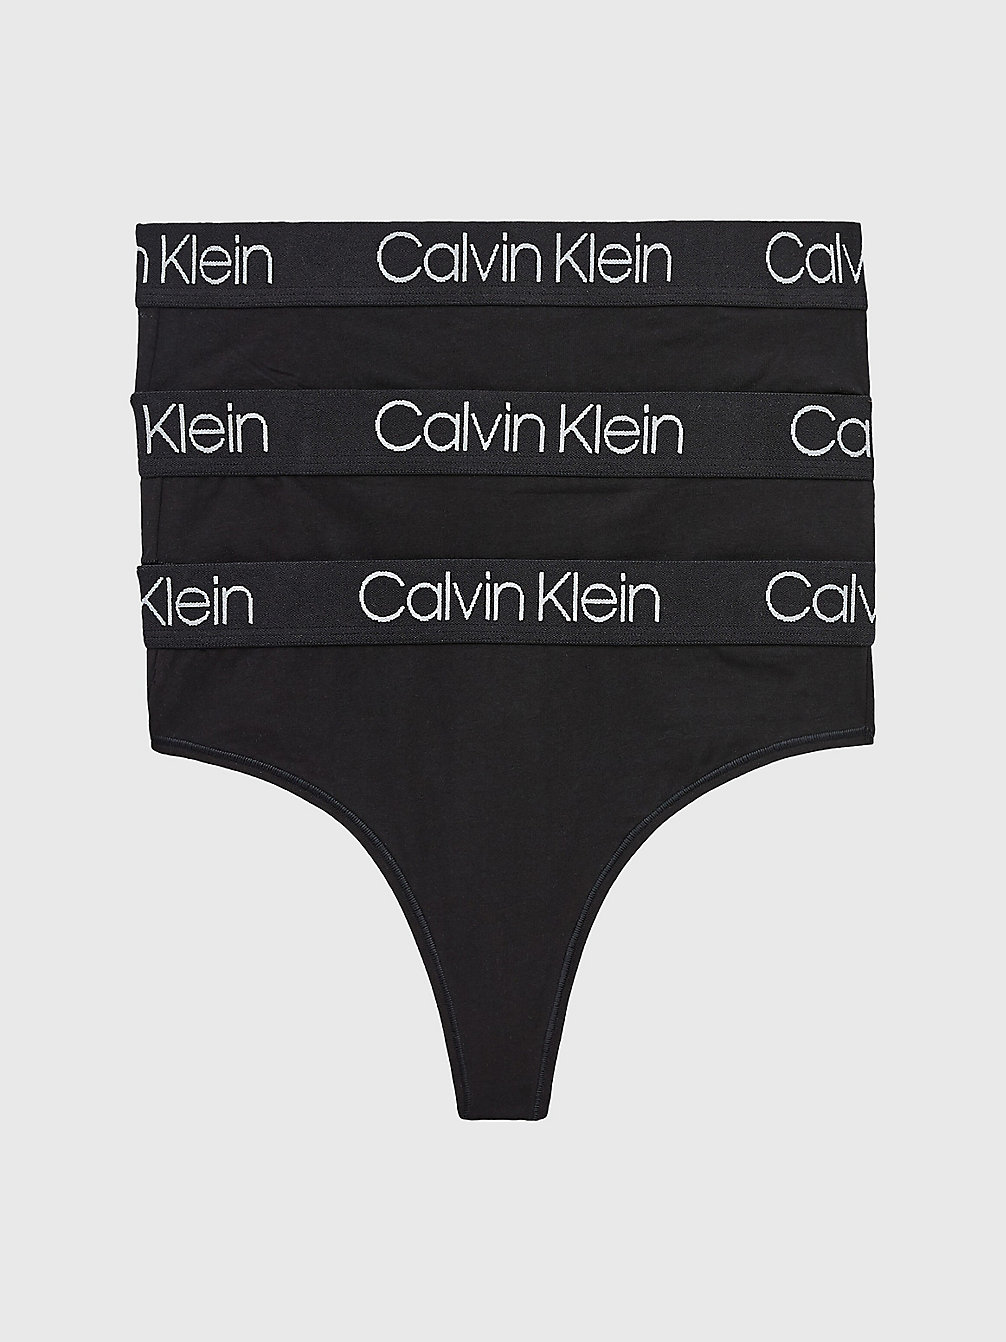 BLACK/ BLACK/ BLACK 3 Pack High Waisted Thongs - Body undefined women Calvin Klein